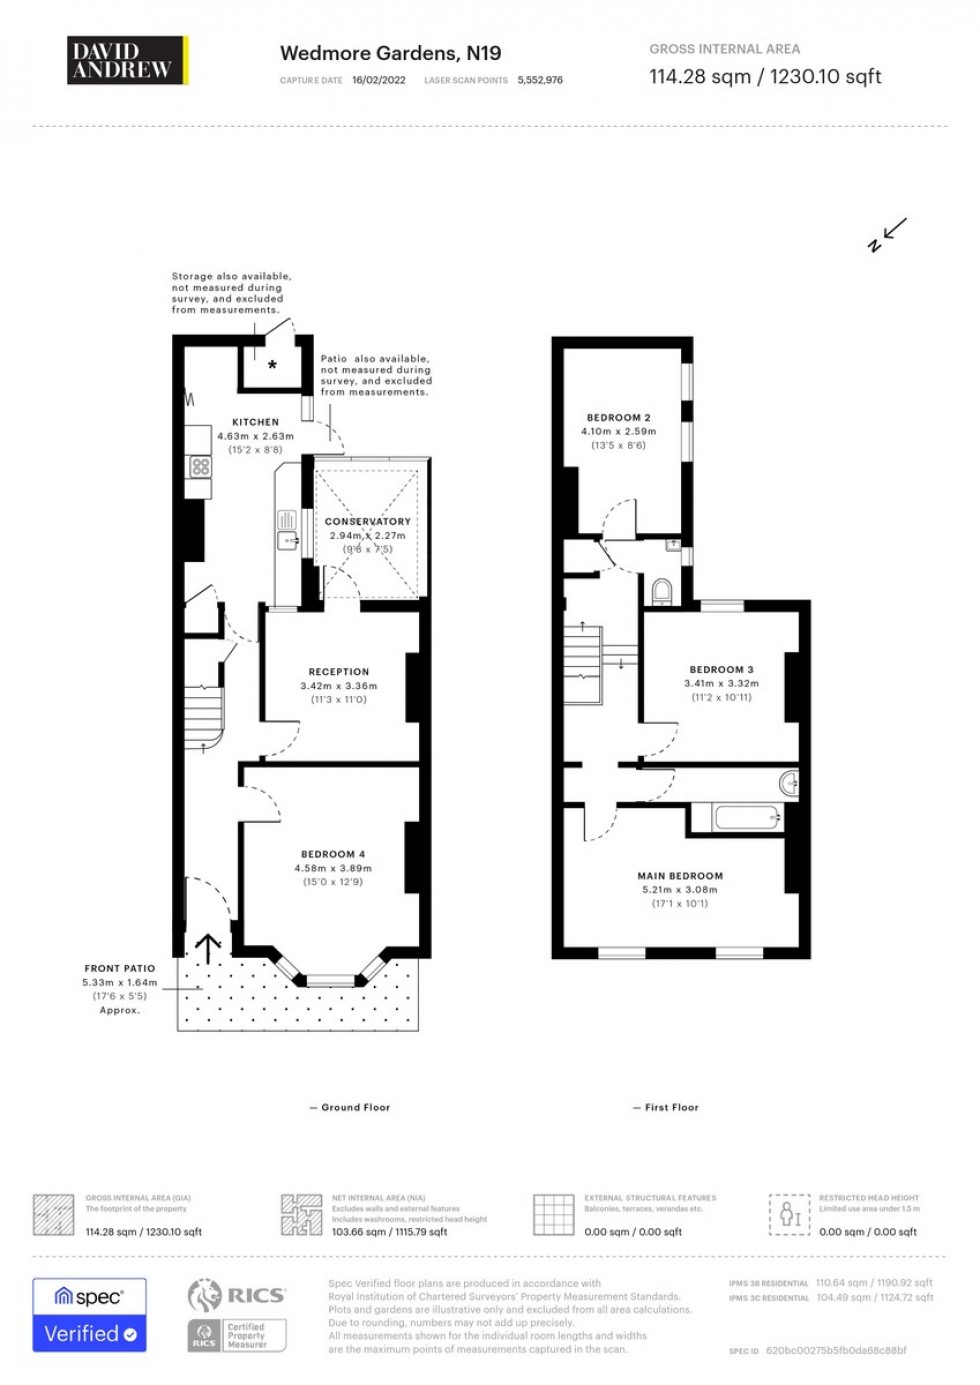 Floorplan for Wedmore Gardens, N19 4DL